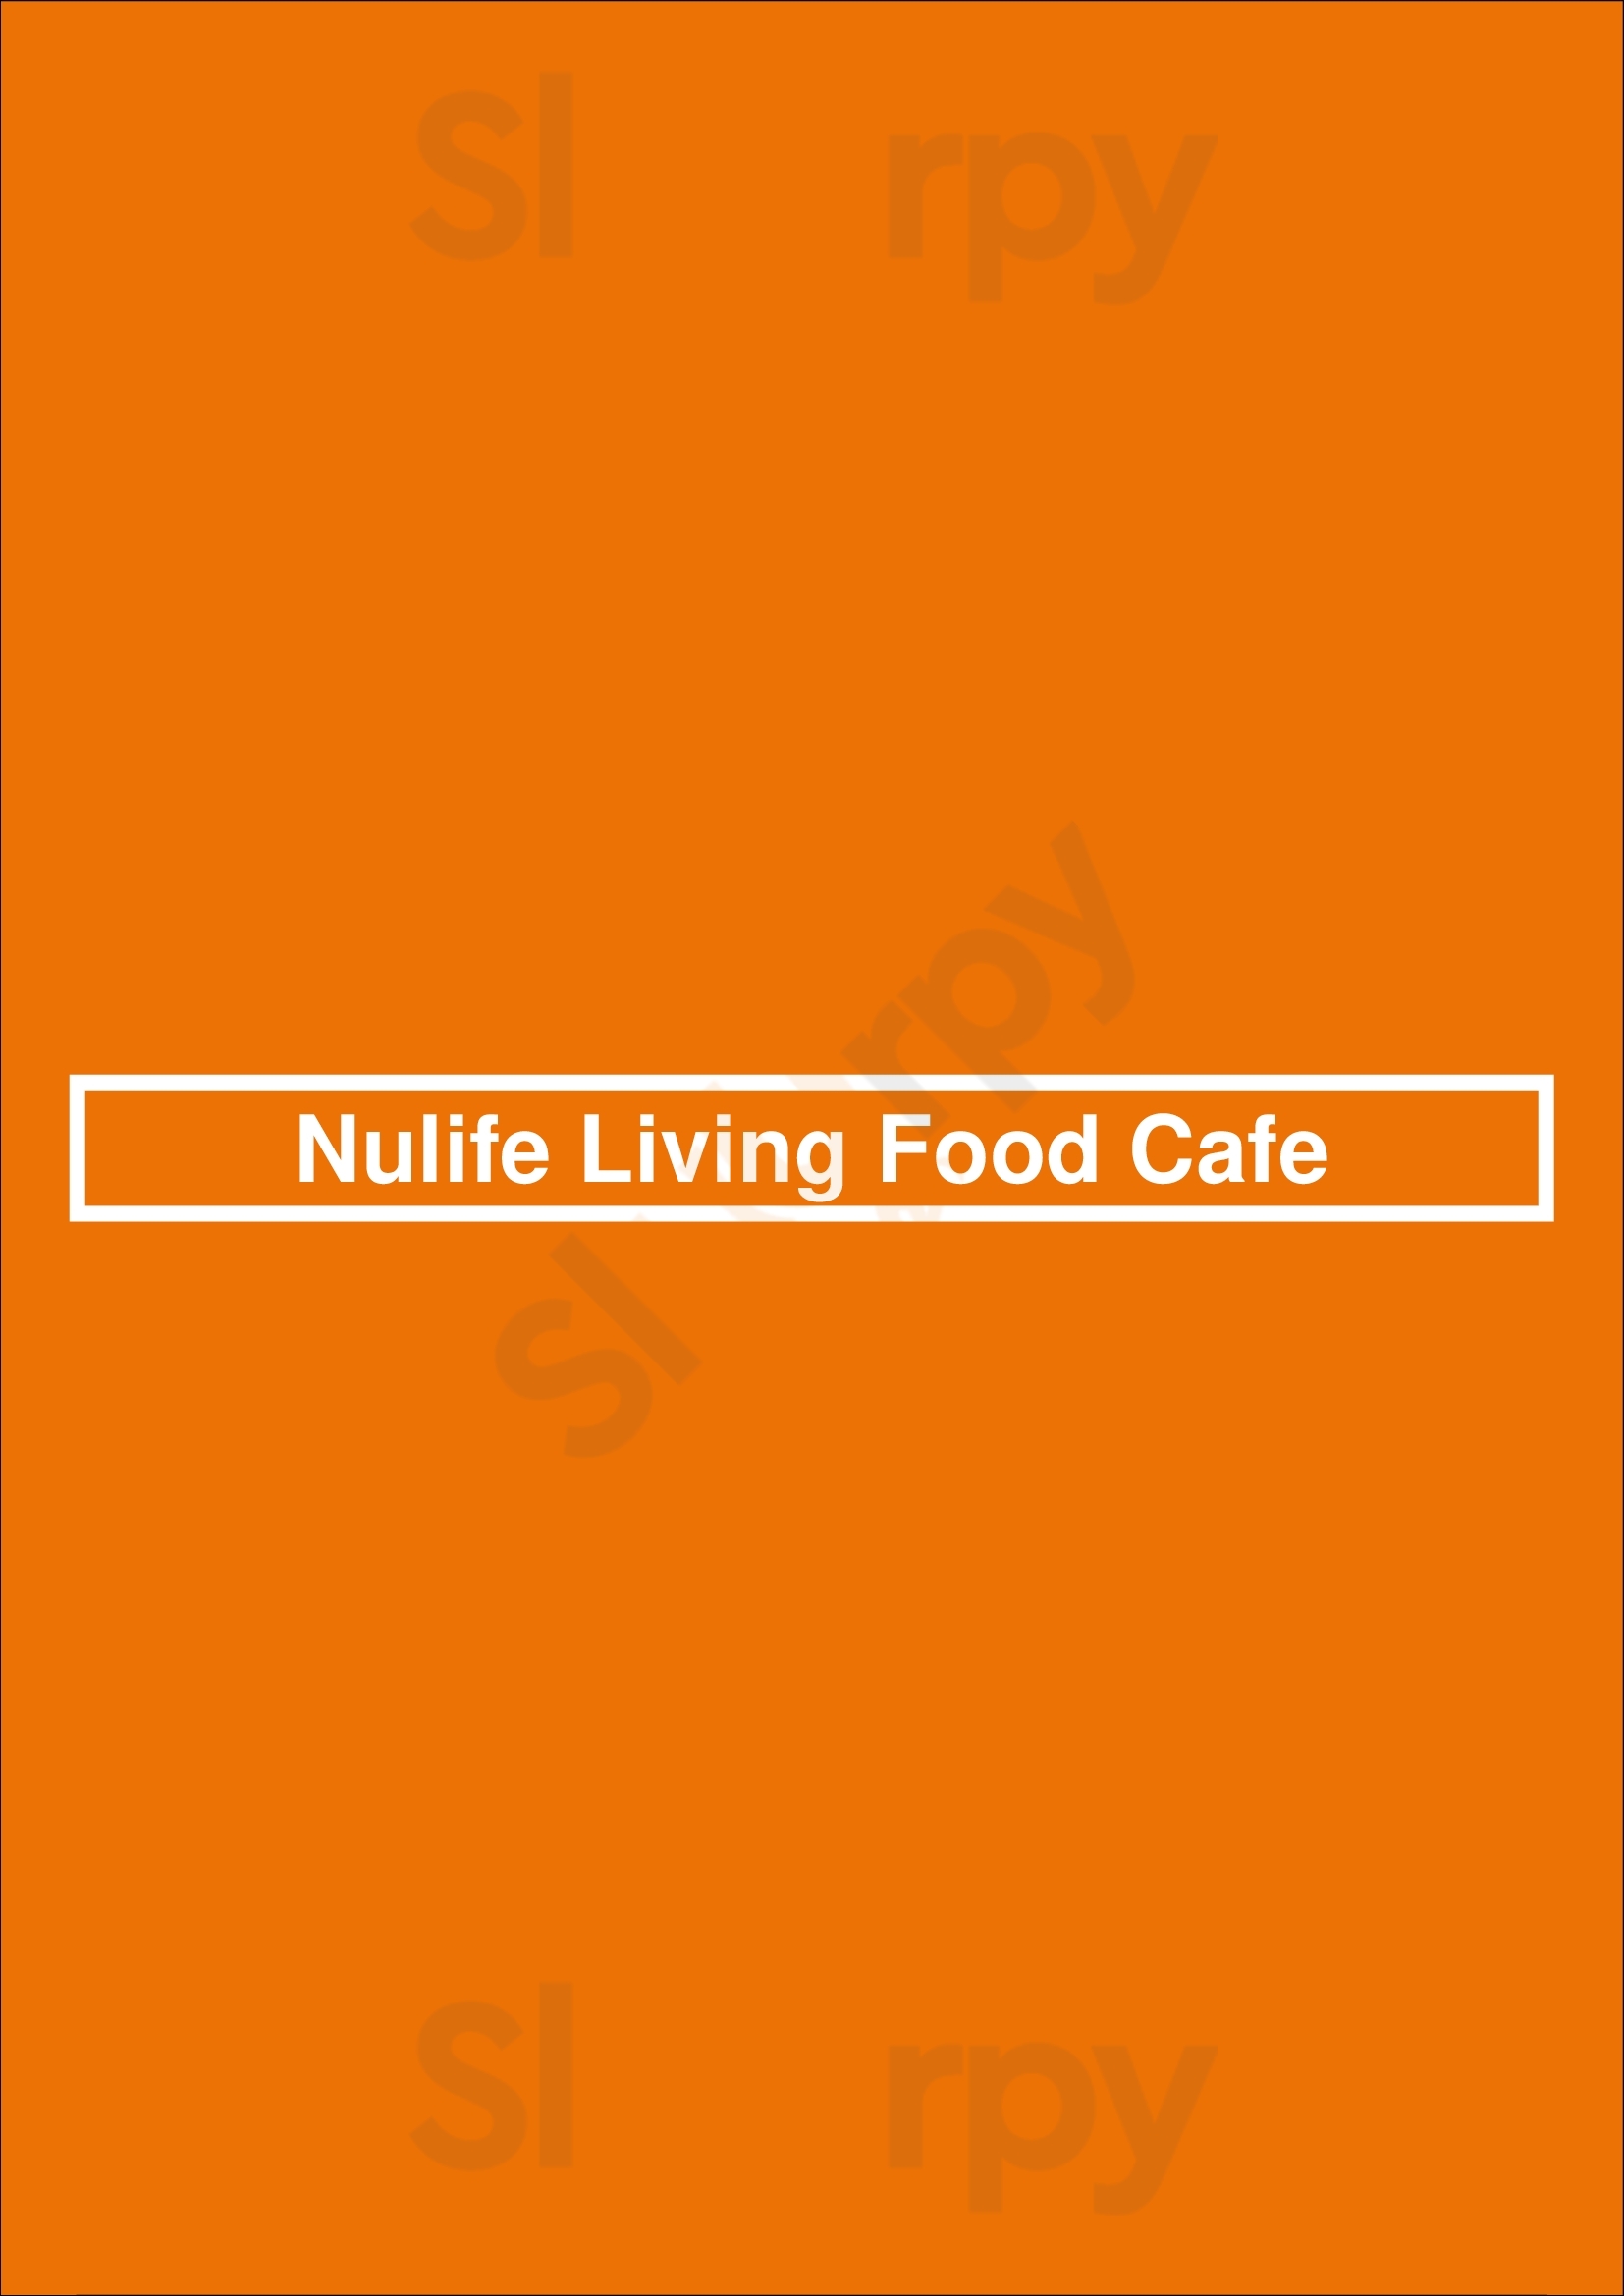 Nulife Living Food Cafe Coquitlam Menu - 1